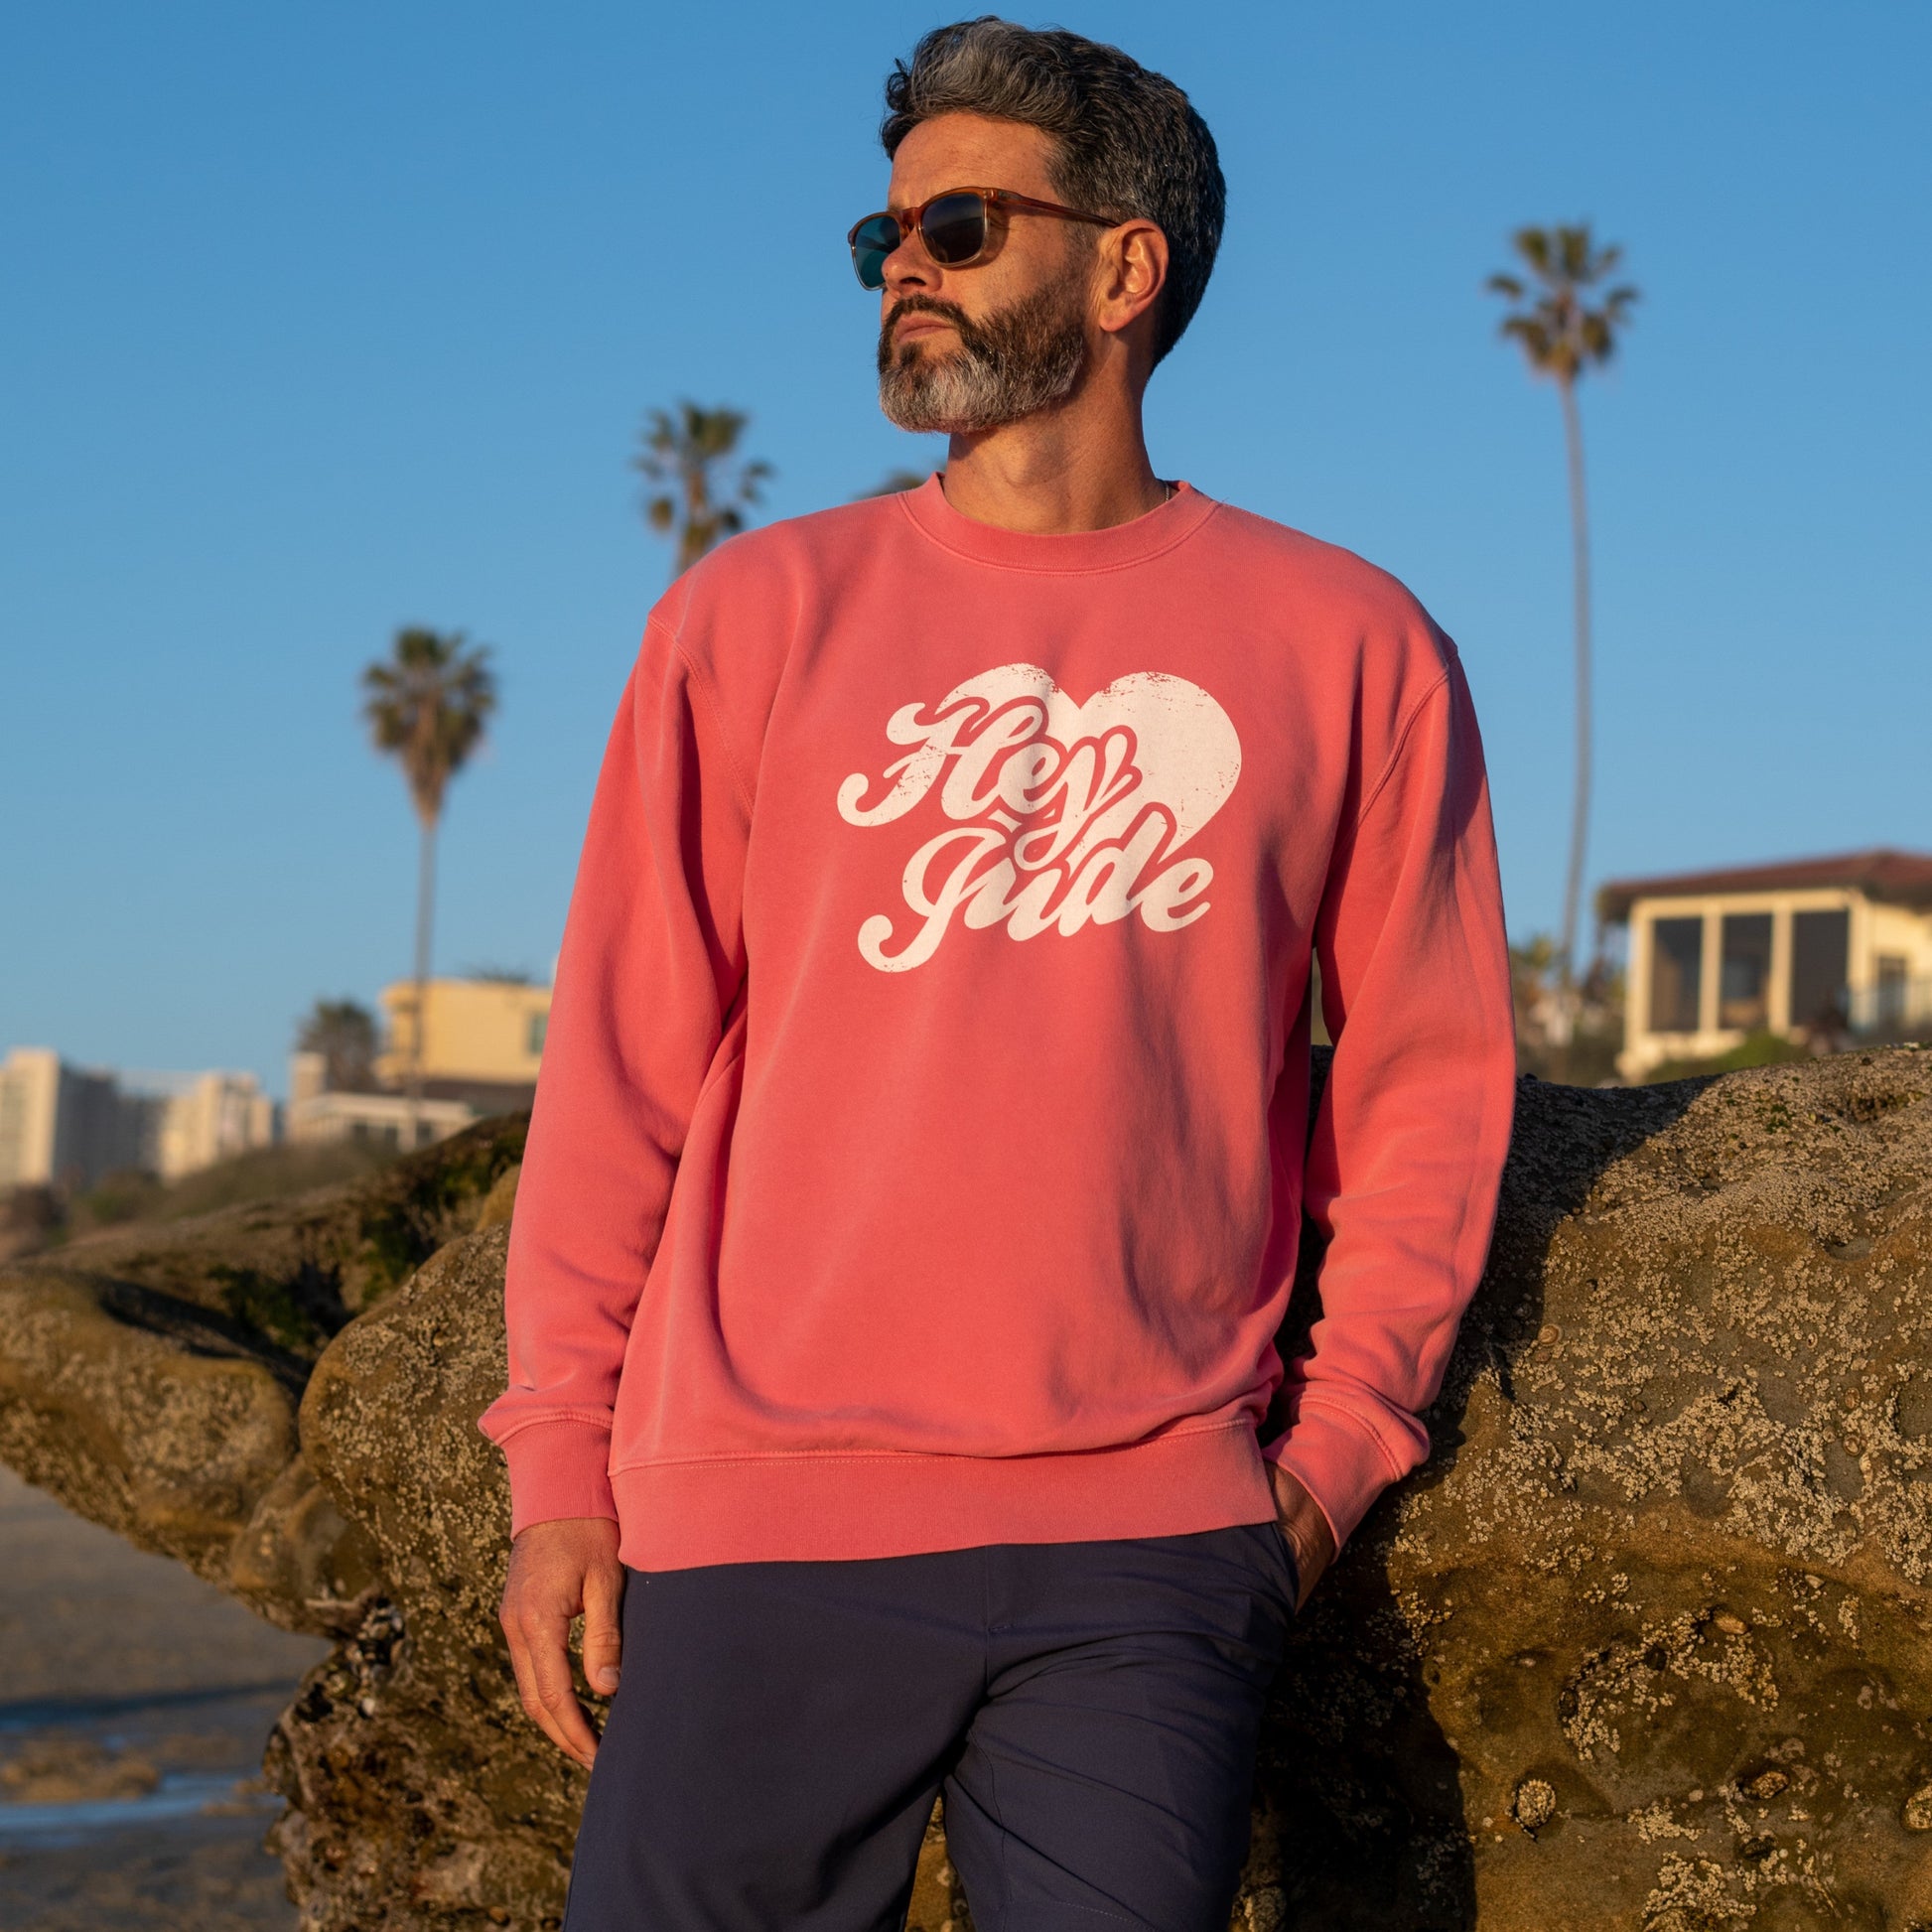 The Beatles Sweatshirt Pink Hey Jude - Section 119